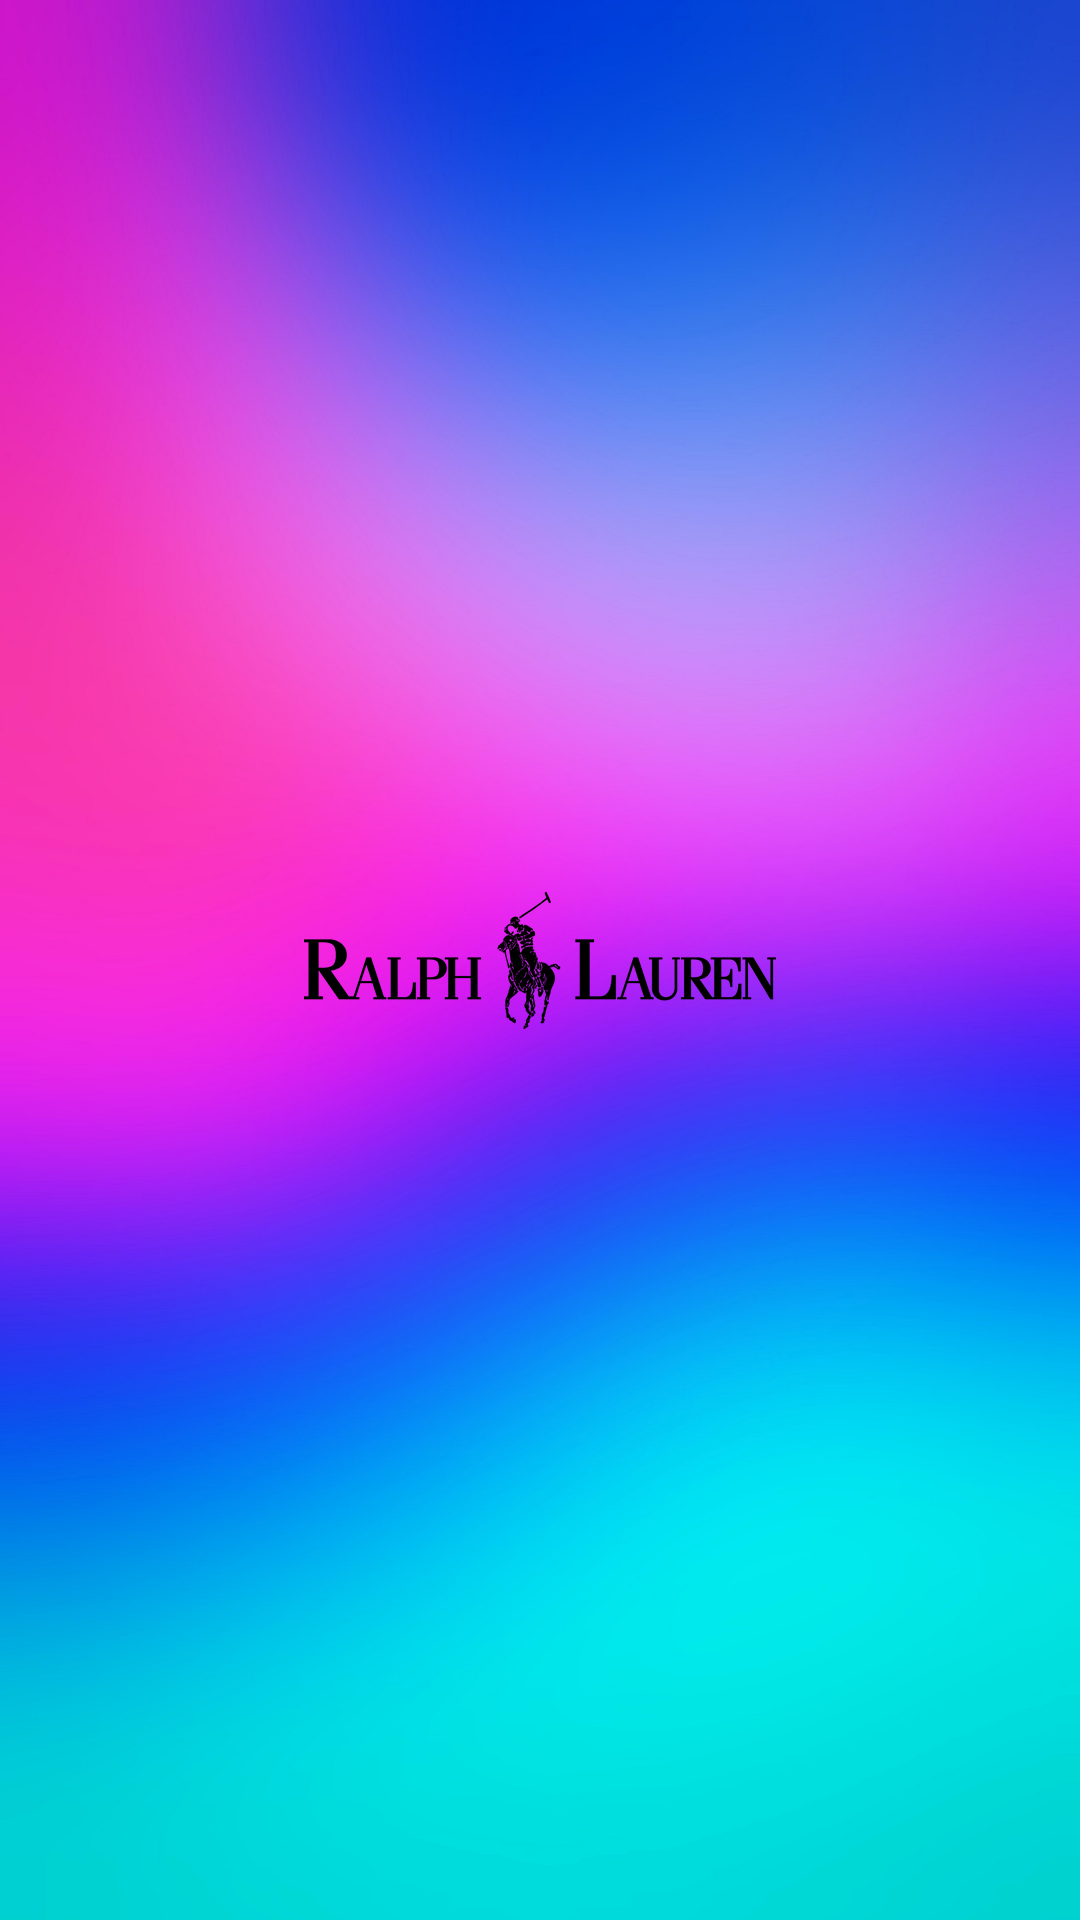 Ralph Lauren Corporation Clothing Fashion Brand, ralph lauren logo ...